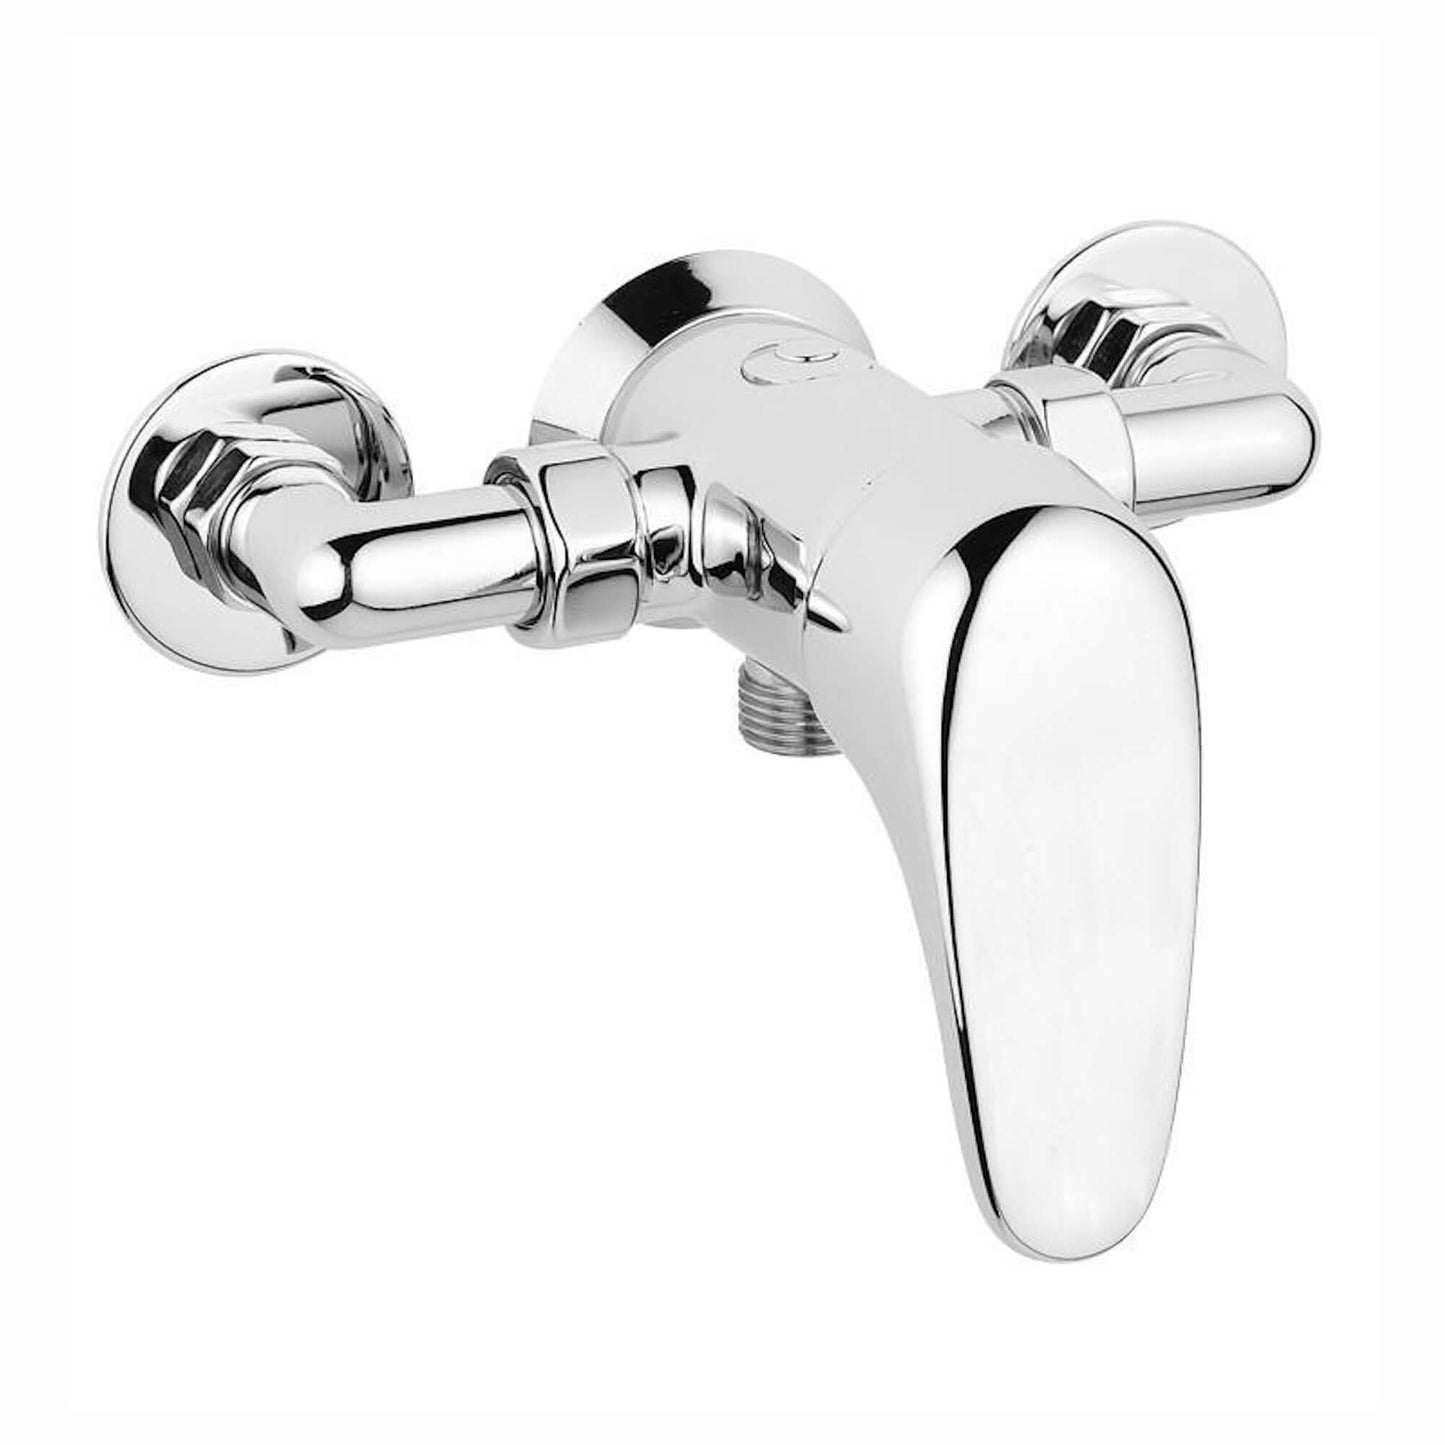 Cruze exposed shower mixer valve tap - chrome - Showers